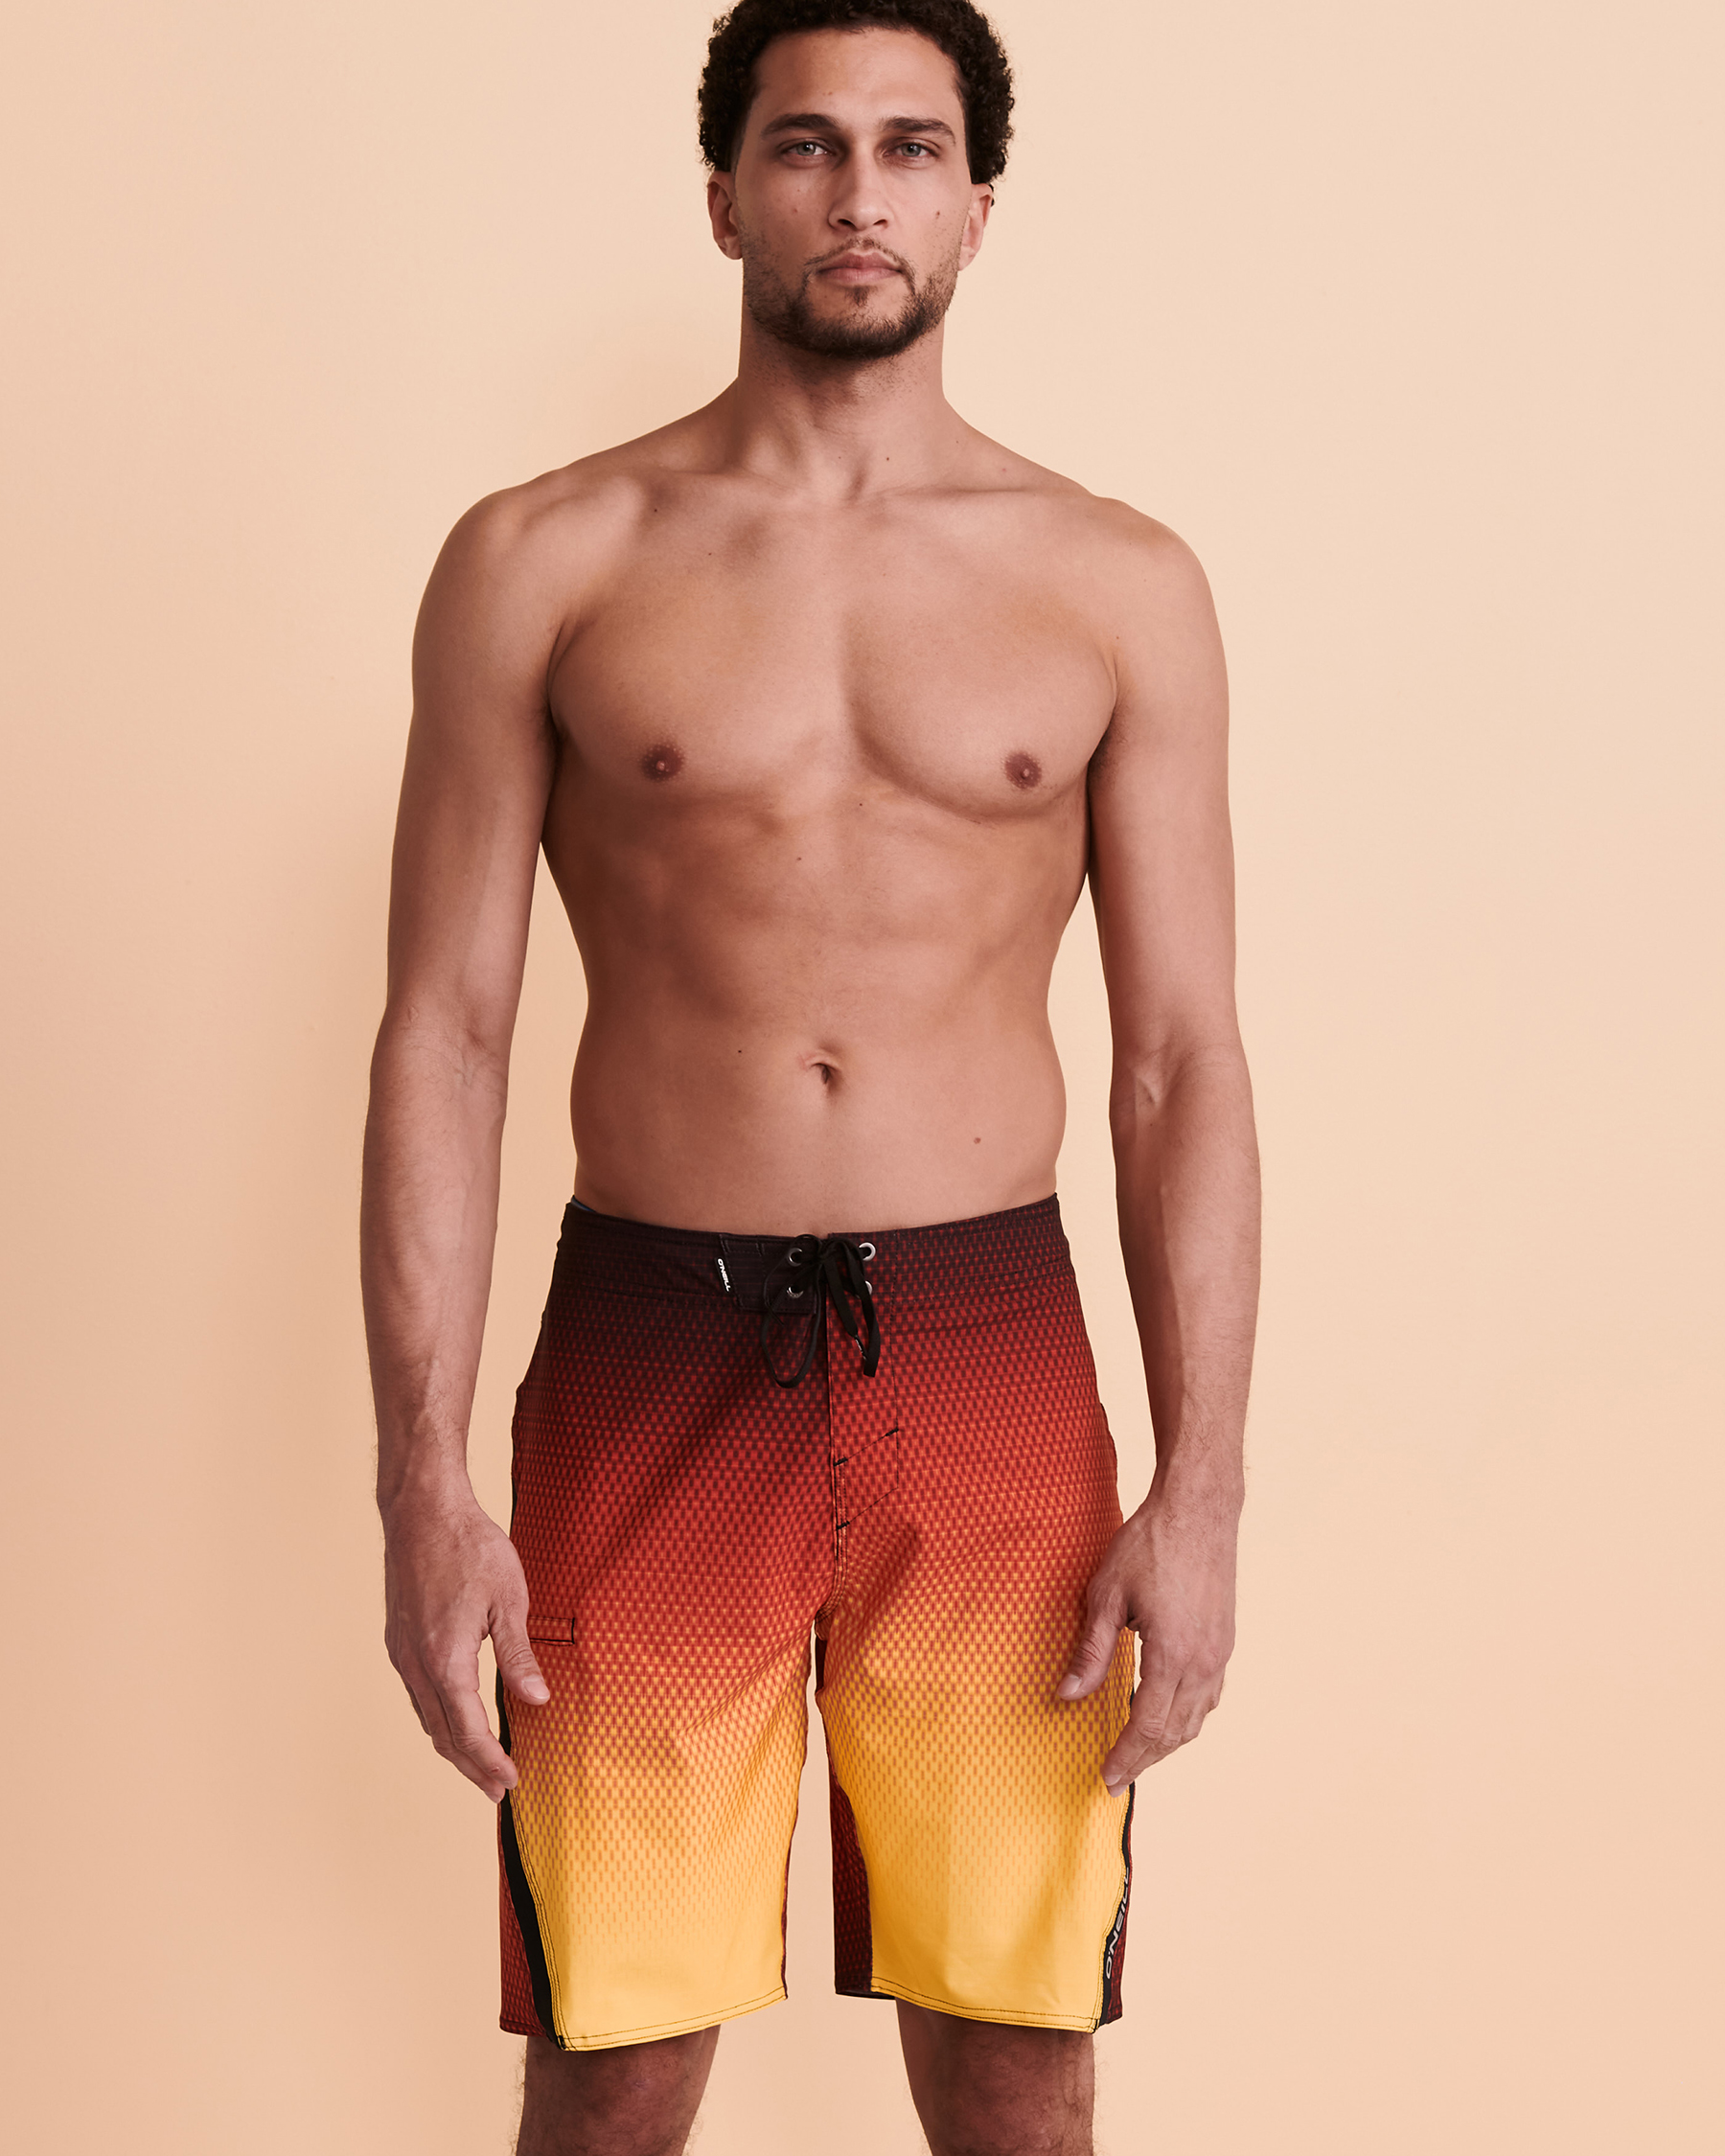 O'NEILL SUPERFREAK FUSE Boardshort Swimsuit Fire SP2106019 - View4